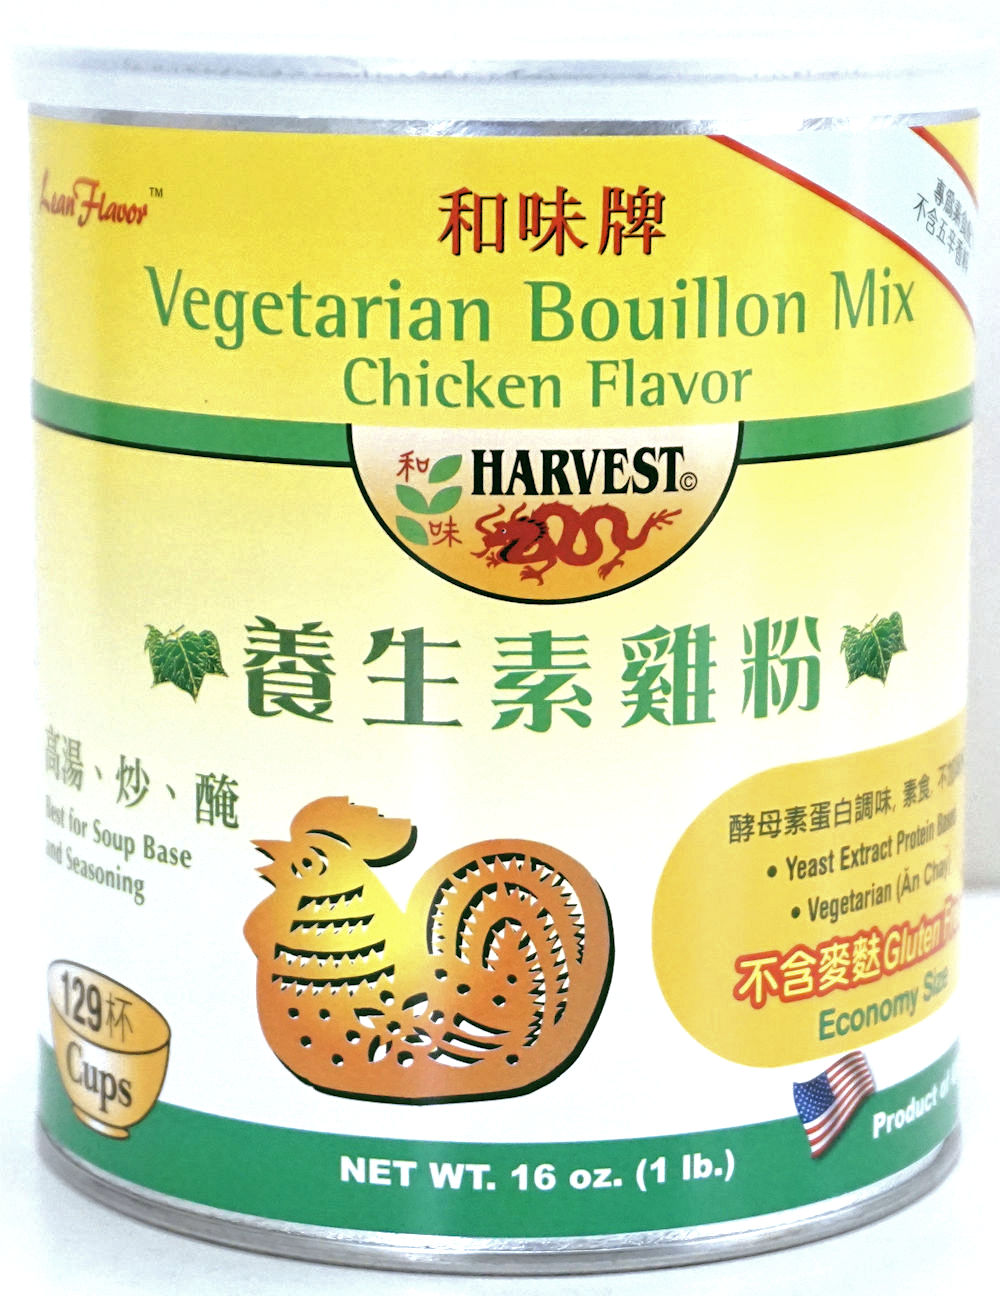 Harvest 2000 Vegetarian Bouillon Mix Chicken Flavor